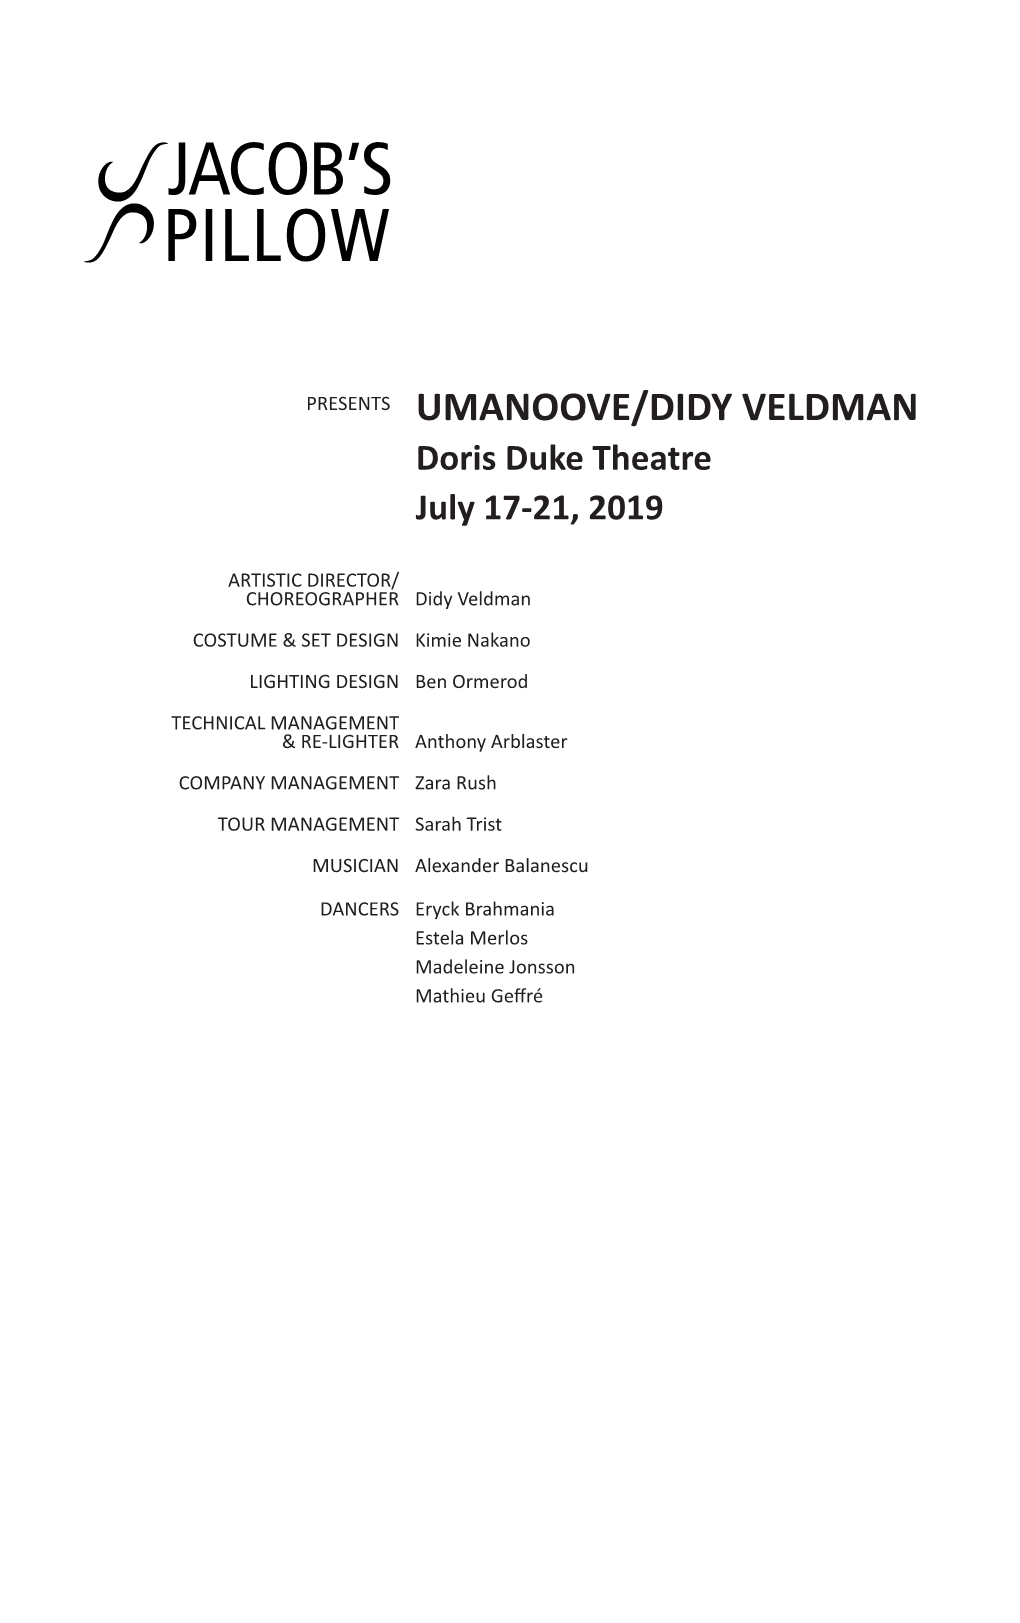 Umanoove/Didy Veldman